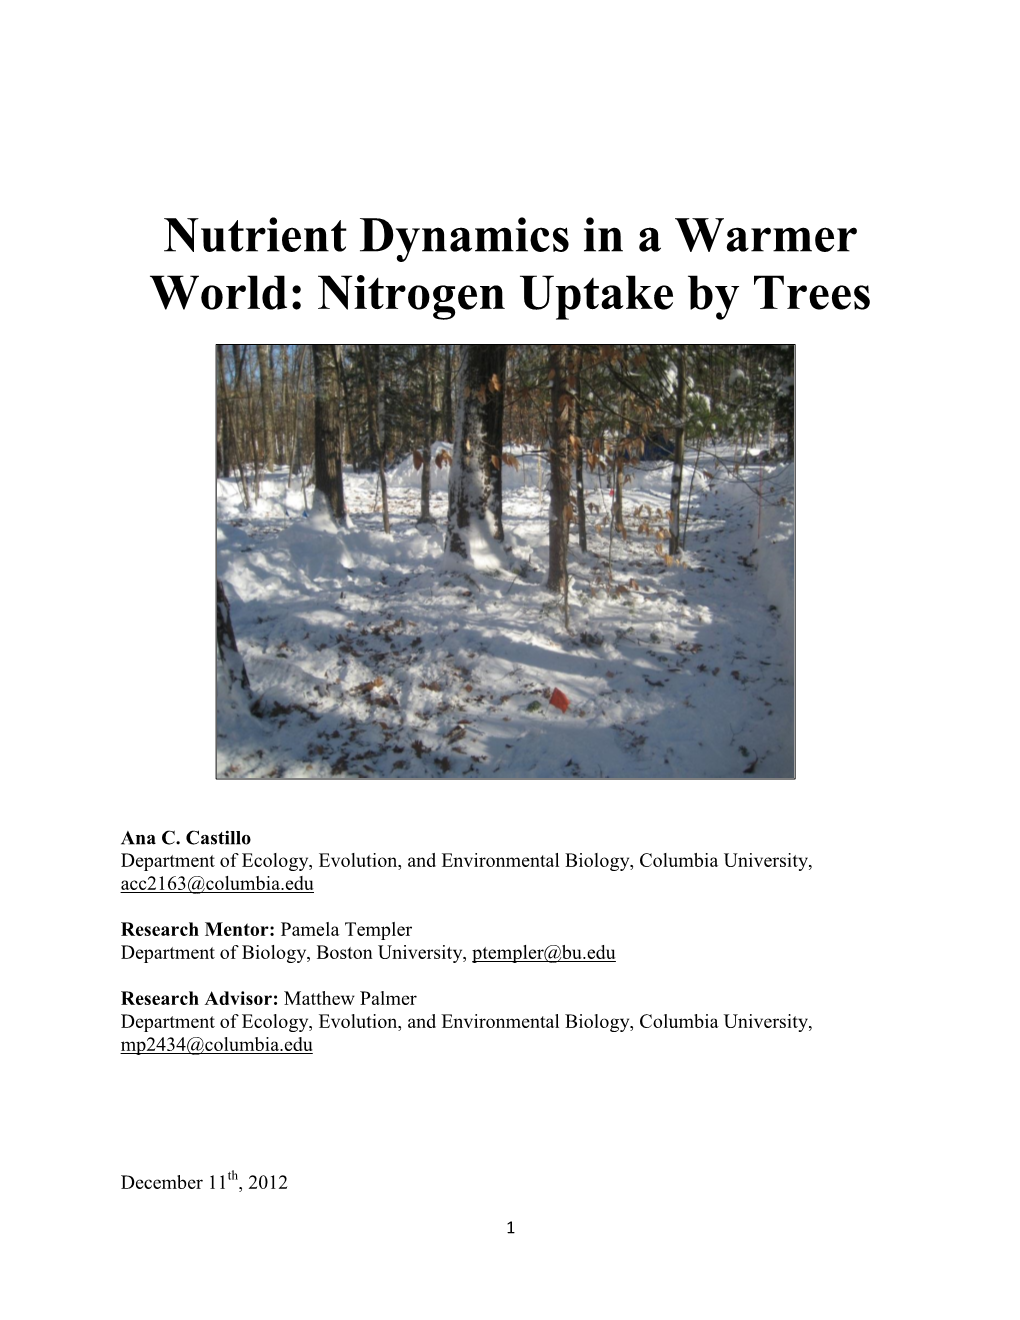 Nitrogen Uptake by Trees